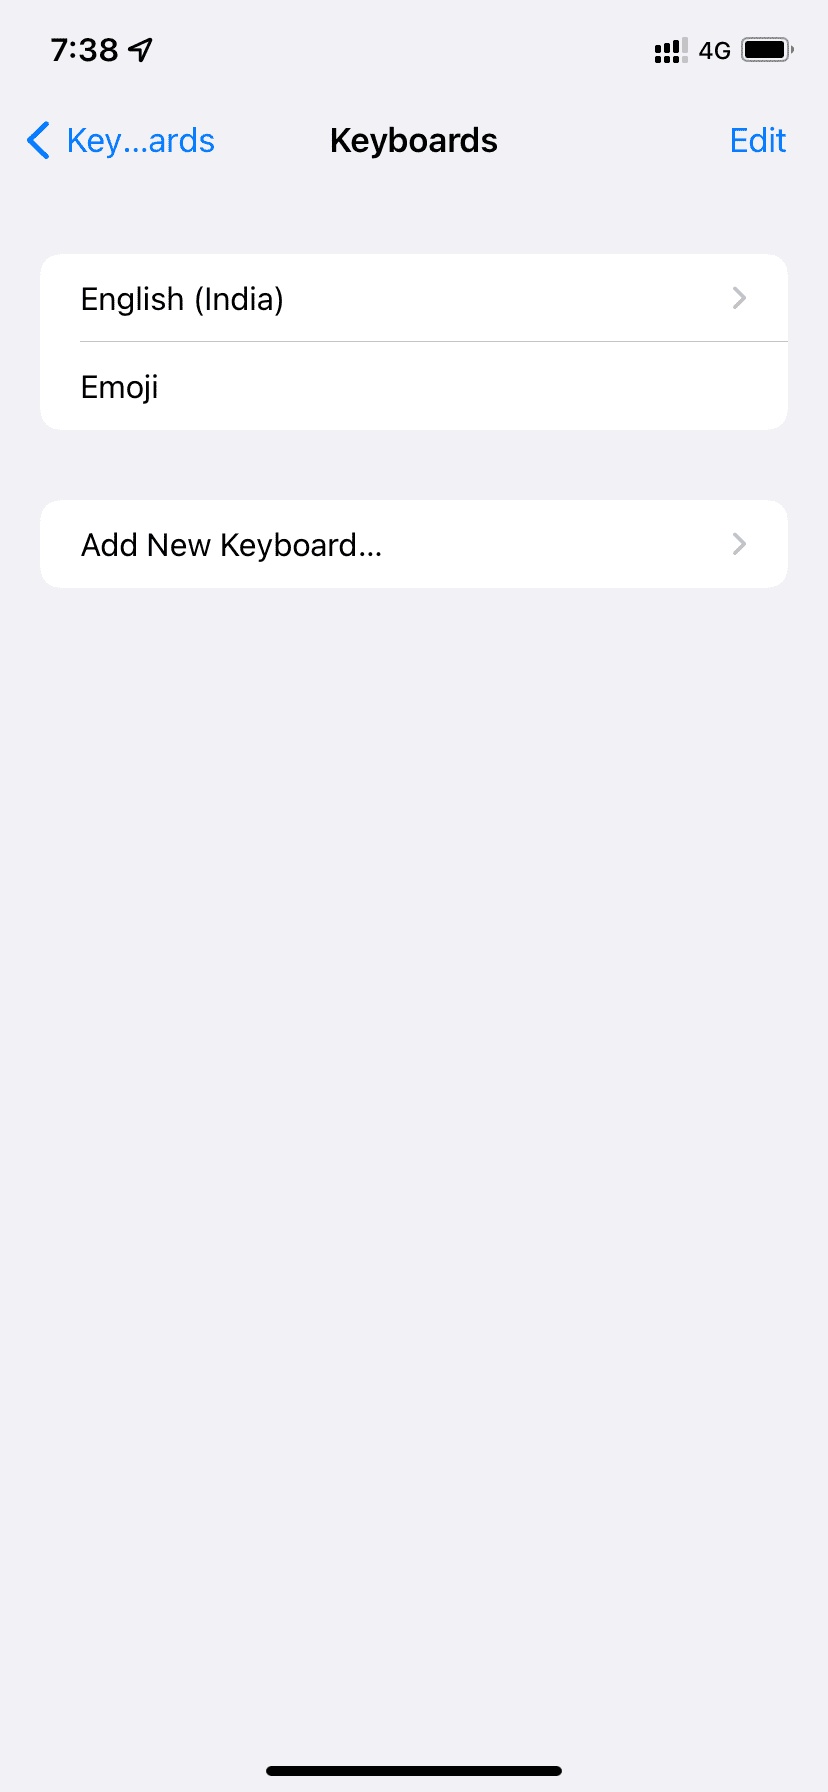 Add New Keyboard in iPhone Settings